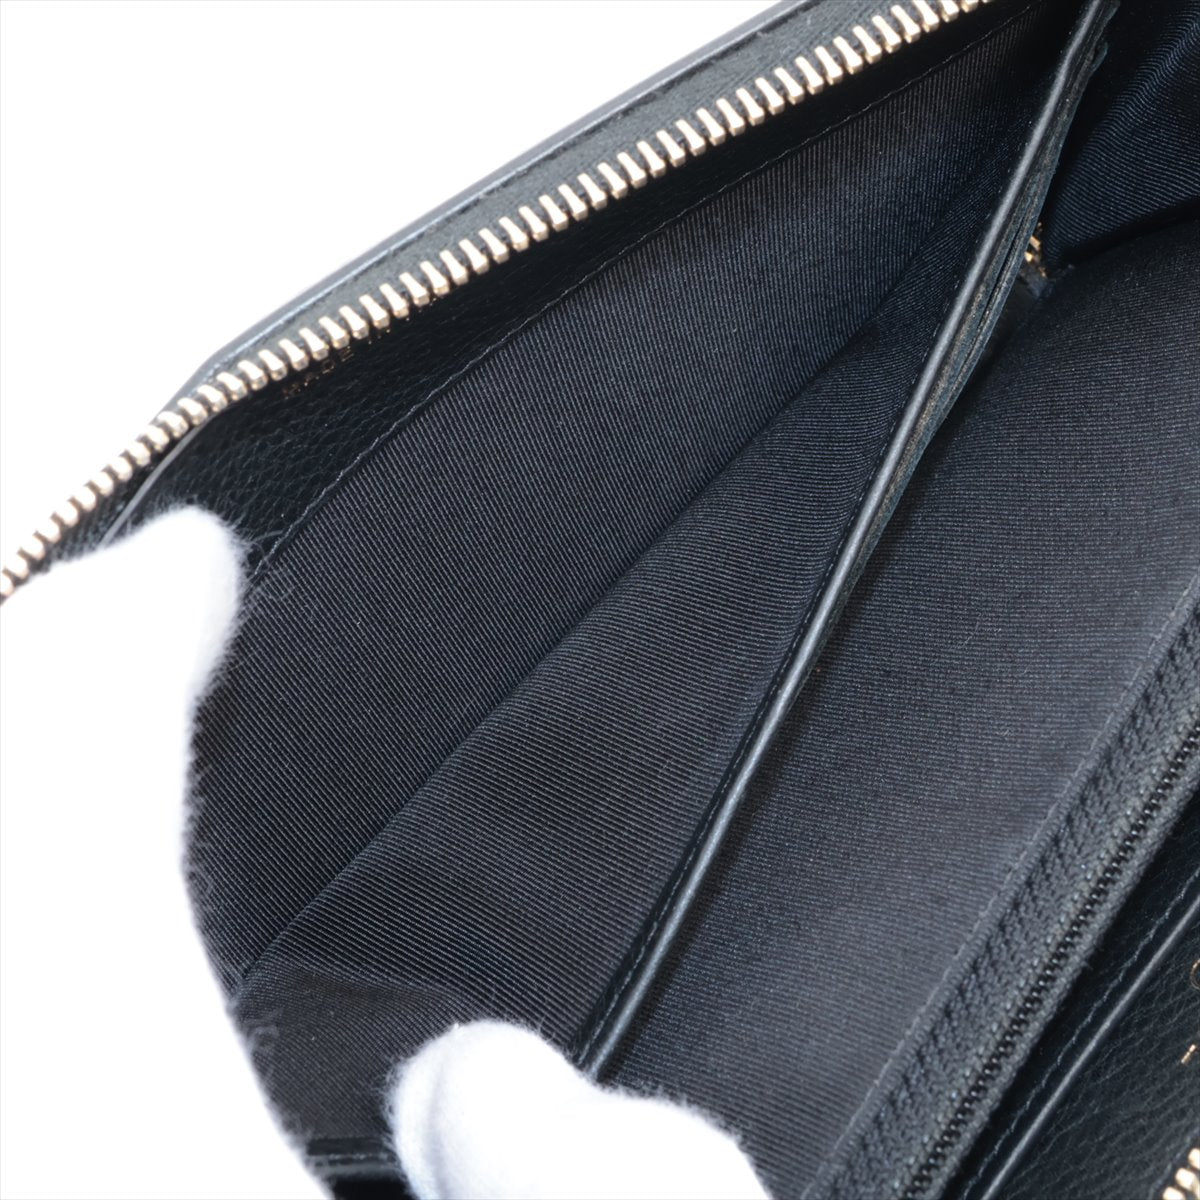 Chanel Coco charm leather x studs Round-Zip-Wallet Black Gold Metal fittings 22XXXXXX